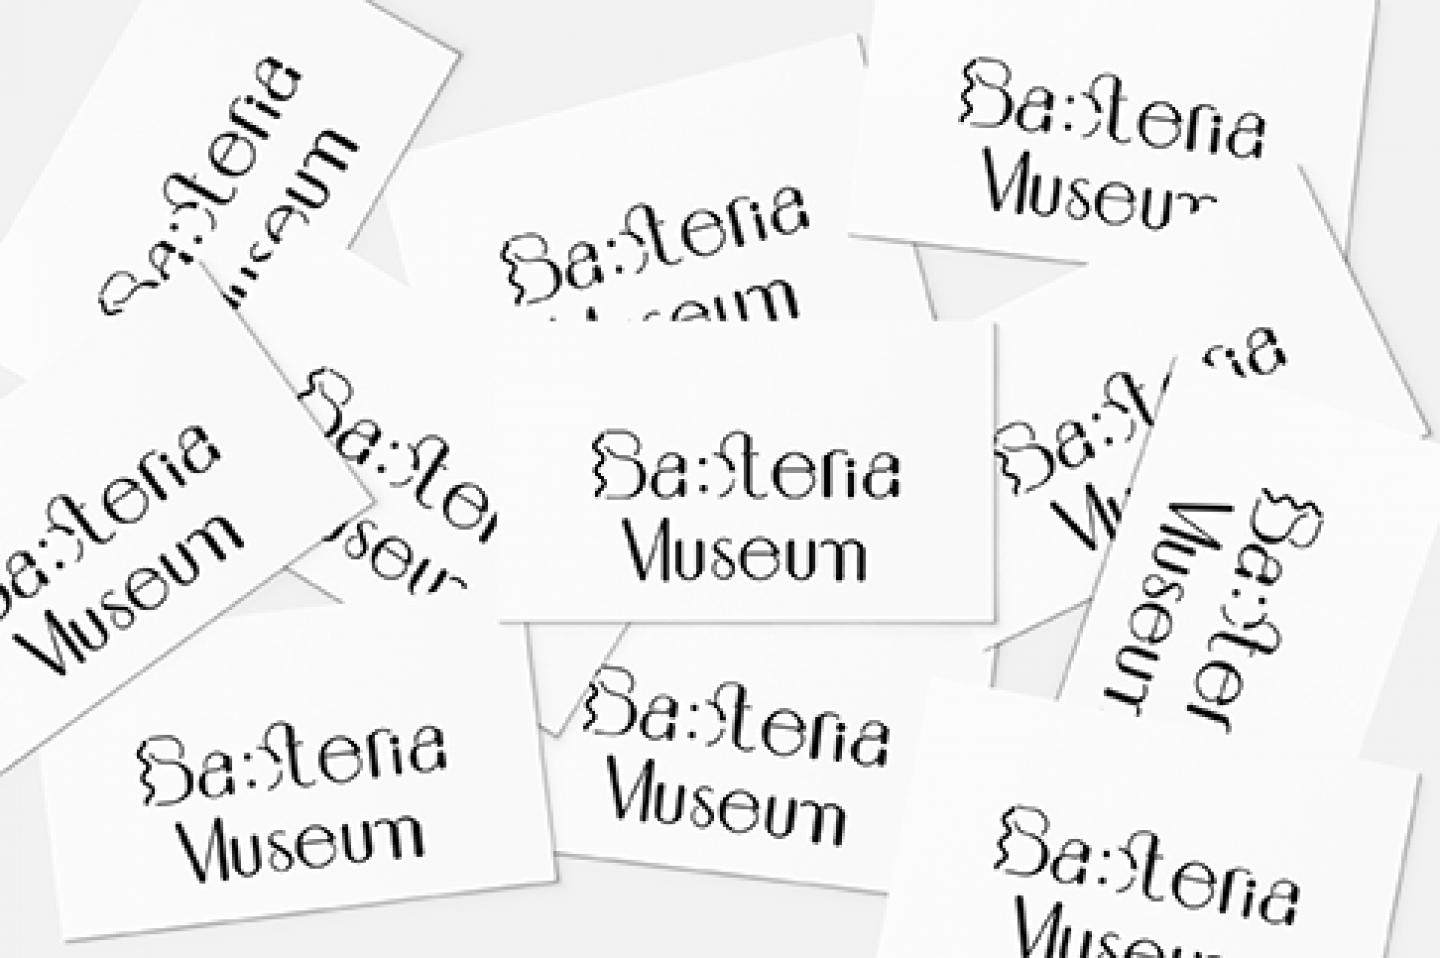 Bacteria Museum Branding Design